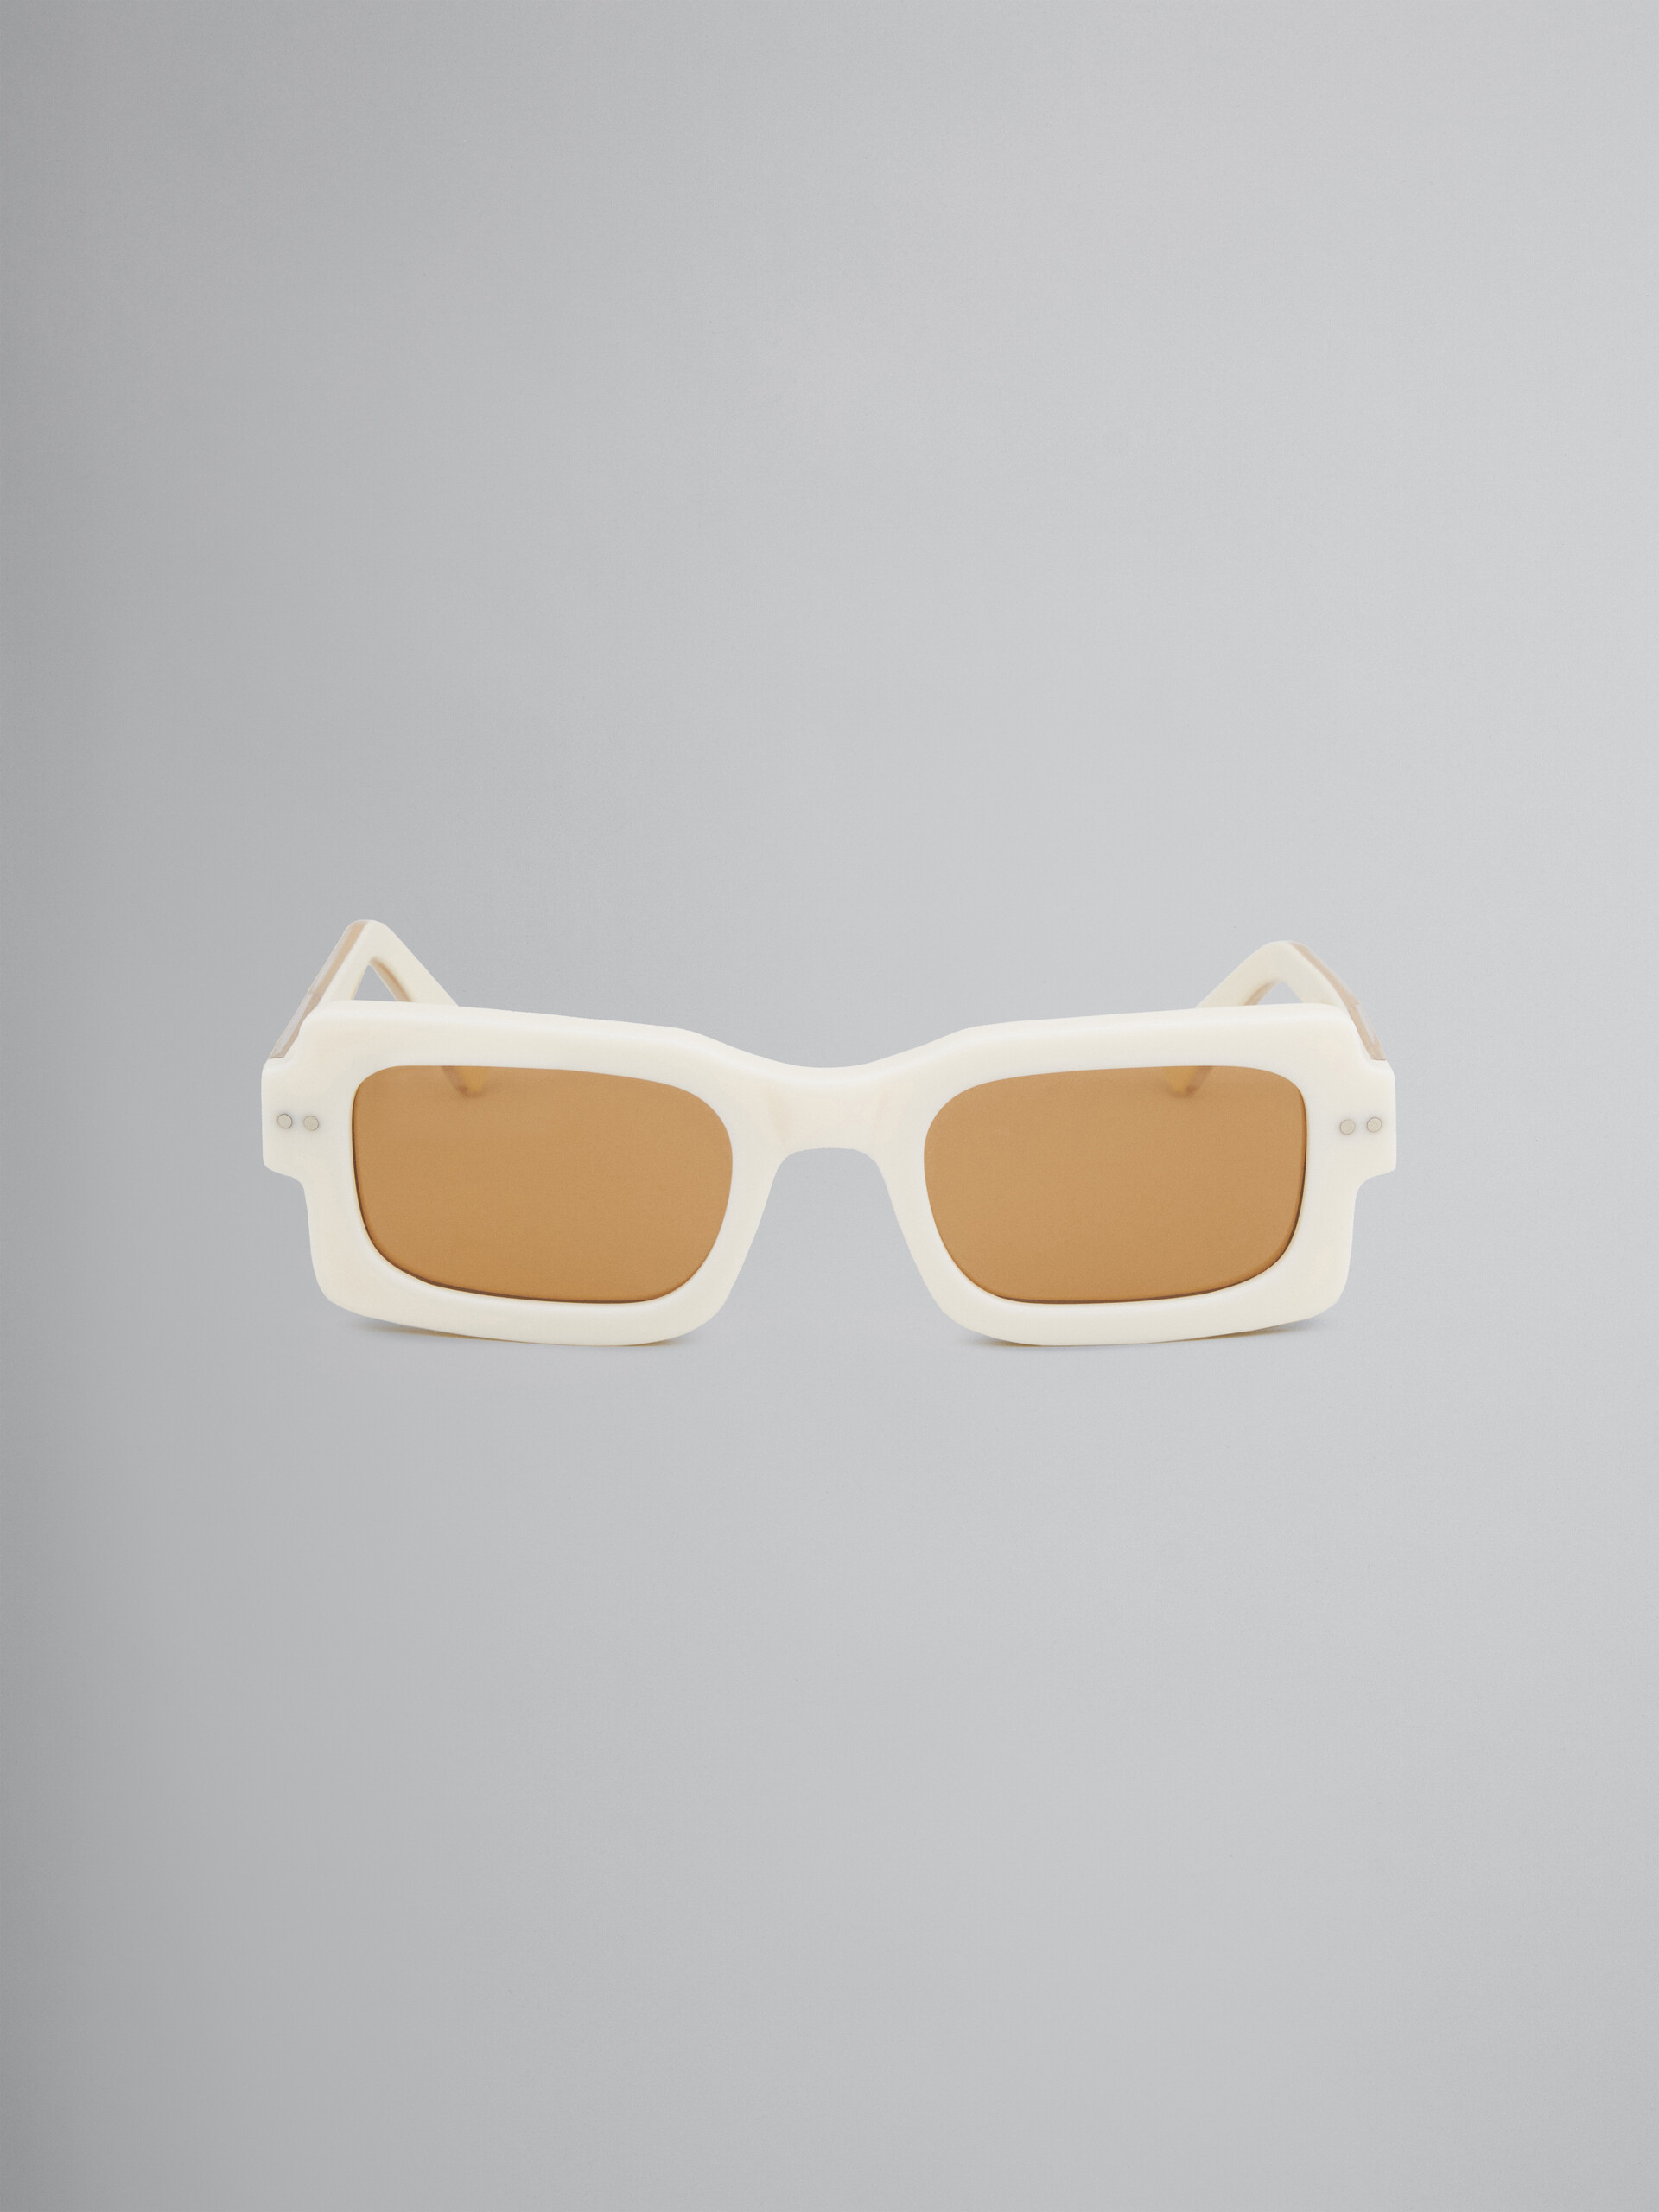 White acetate LAKE VOSTOK sunglasses - Optical - Image 1